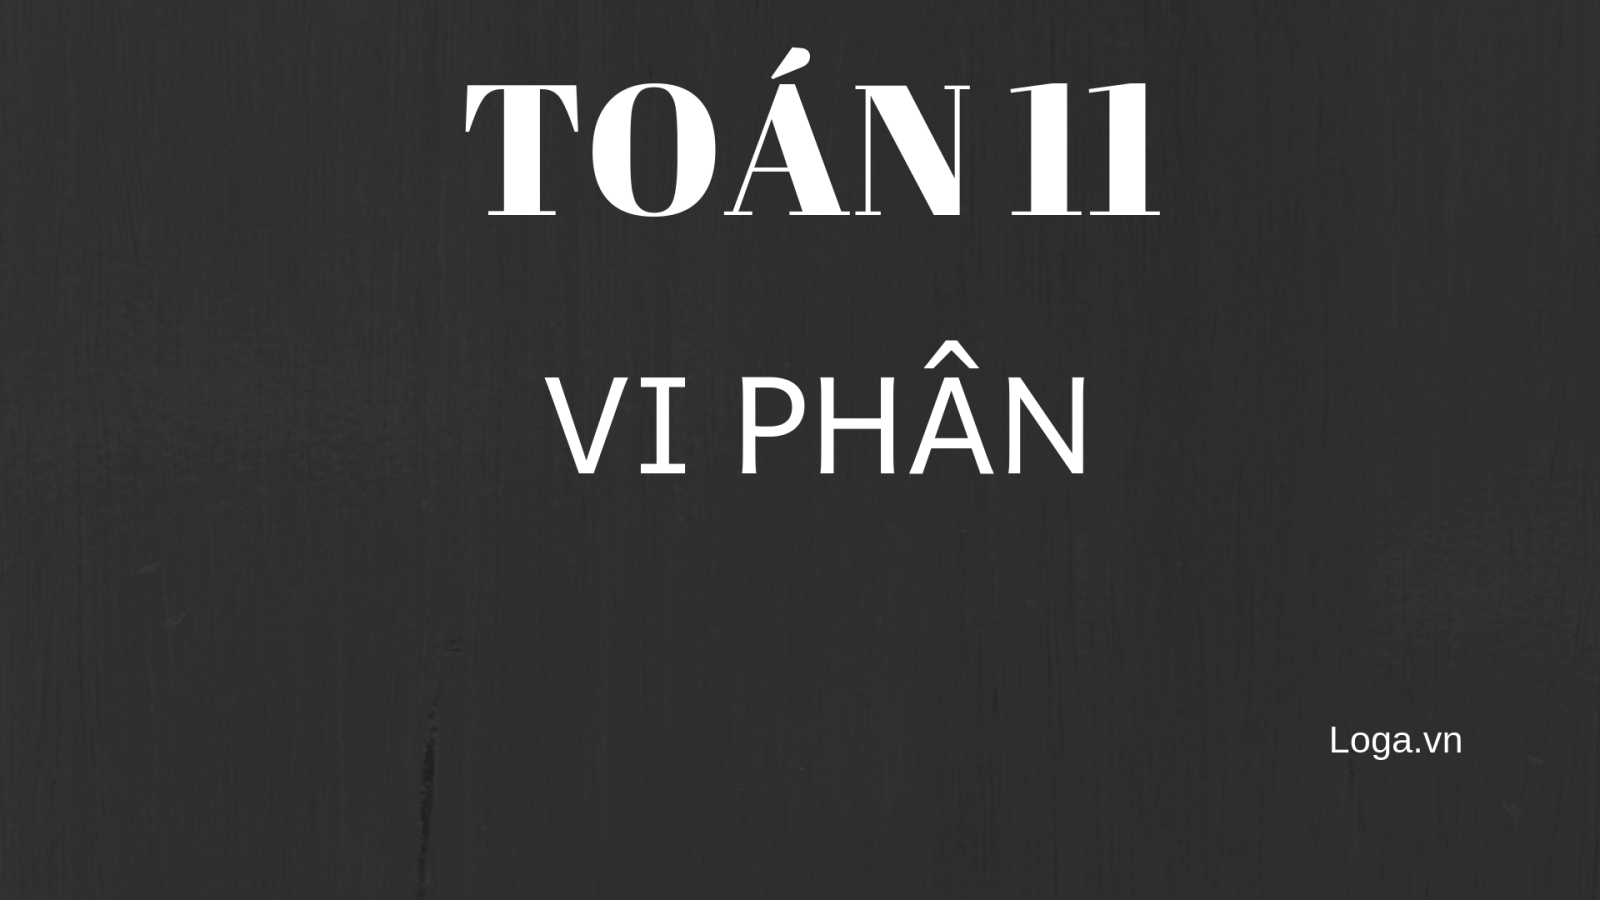 toan-11-vi-phan